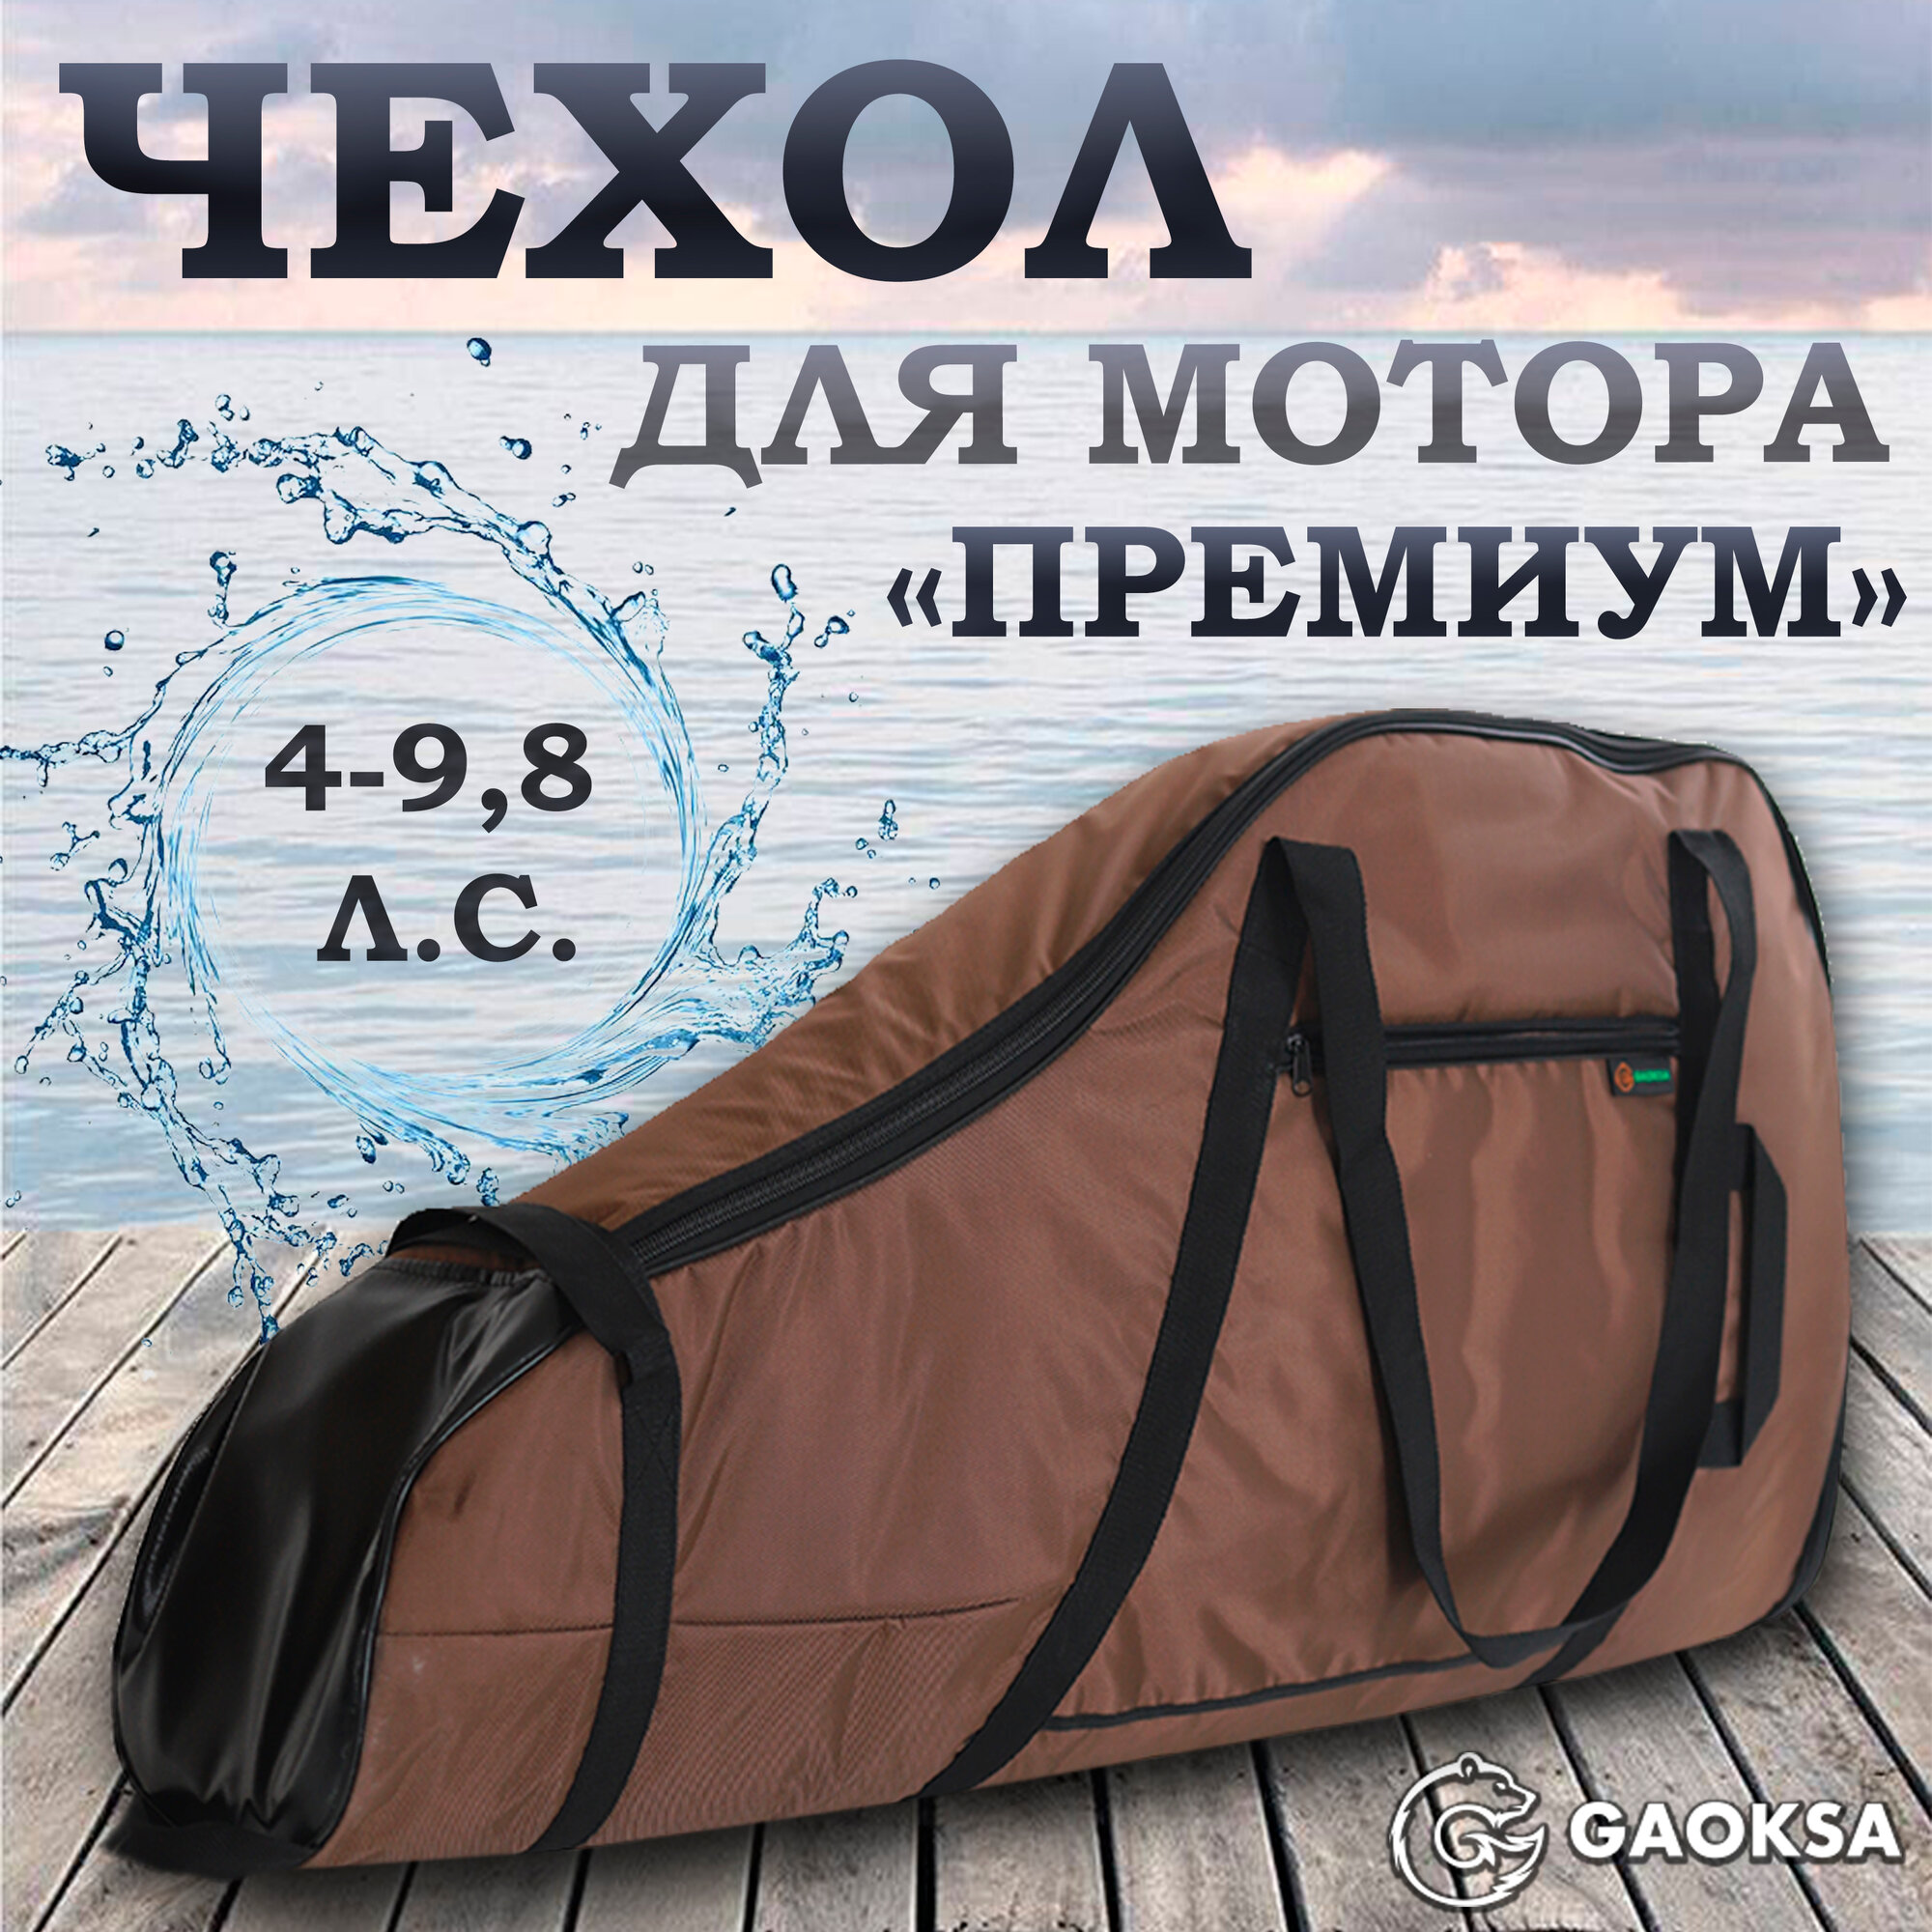 Чехол для лодочного мотора "Премиум" GAOKSA 4-9,8 л. с, коричневый сумка для мотора лодки пвх